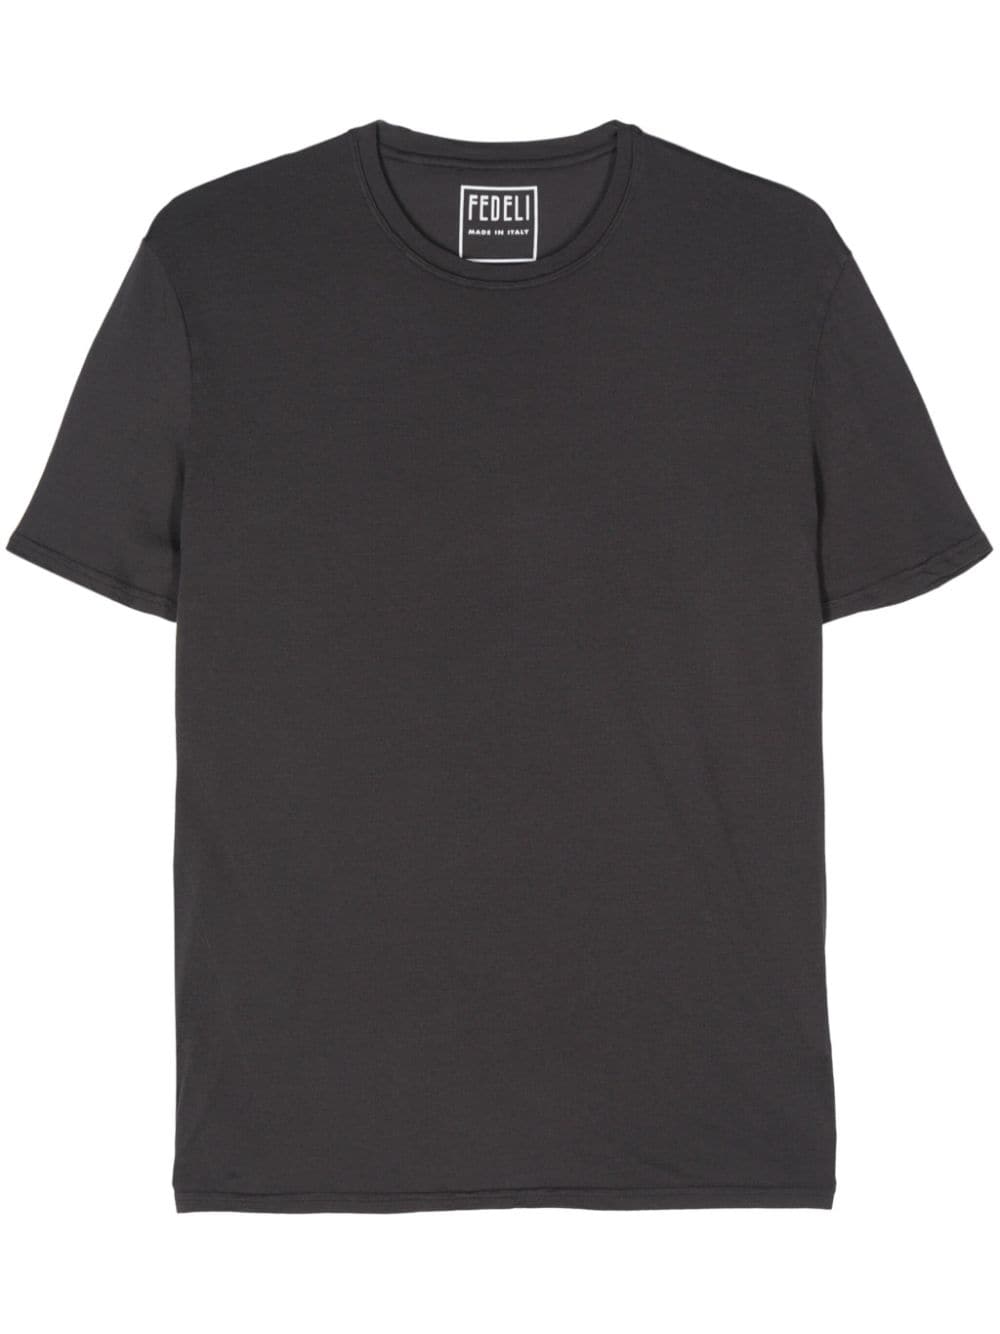 Fedeli short-sleeve cotton T-shirt - Grau von Fedeli